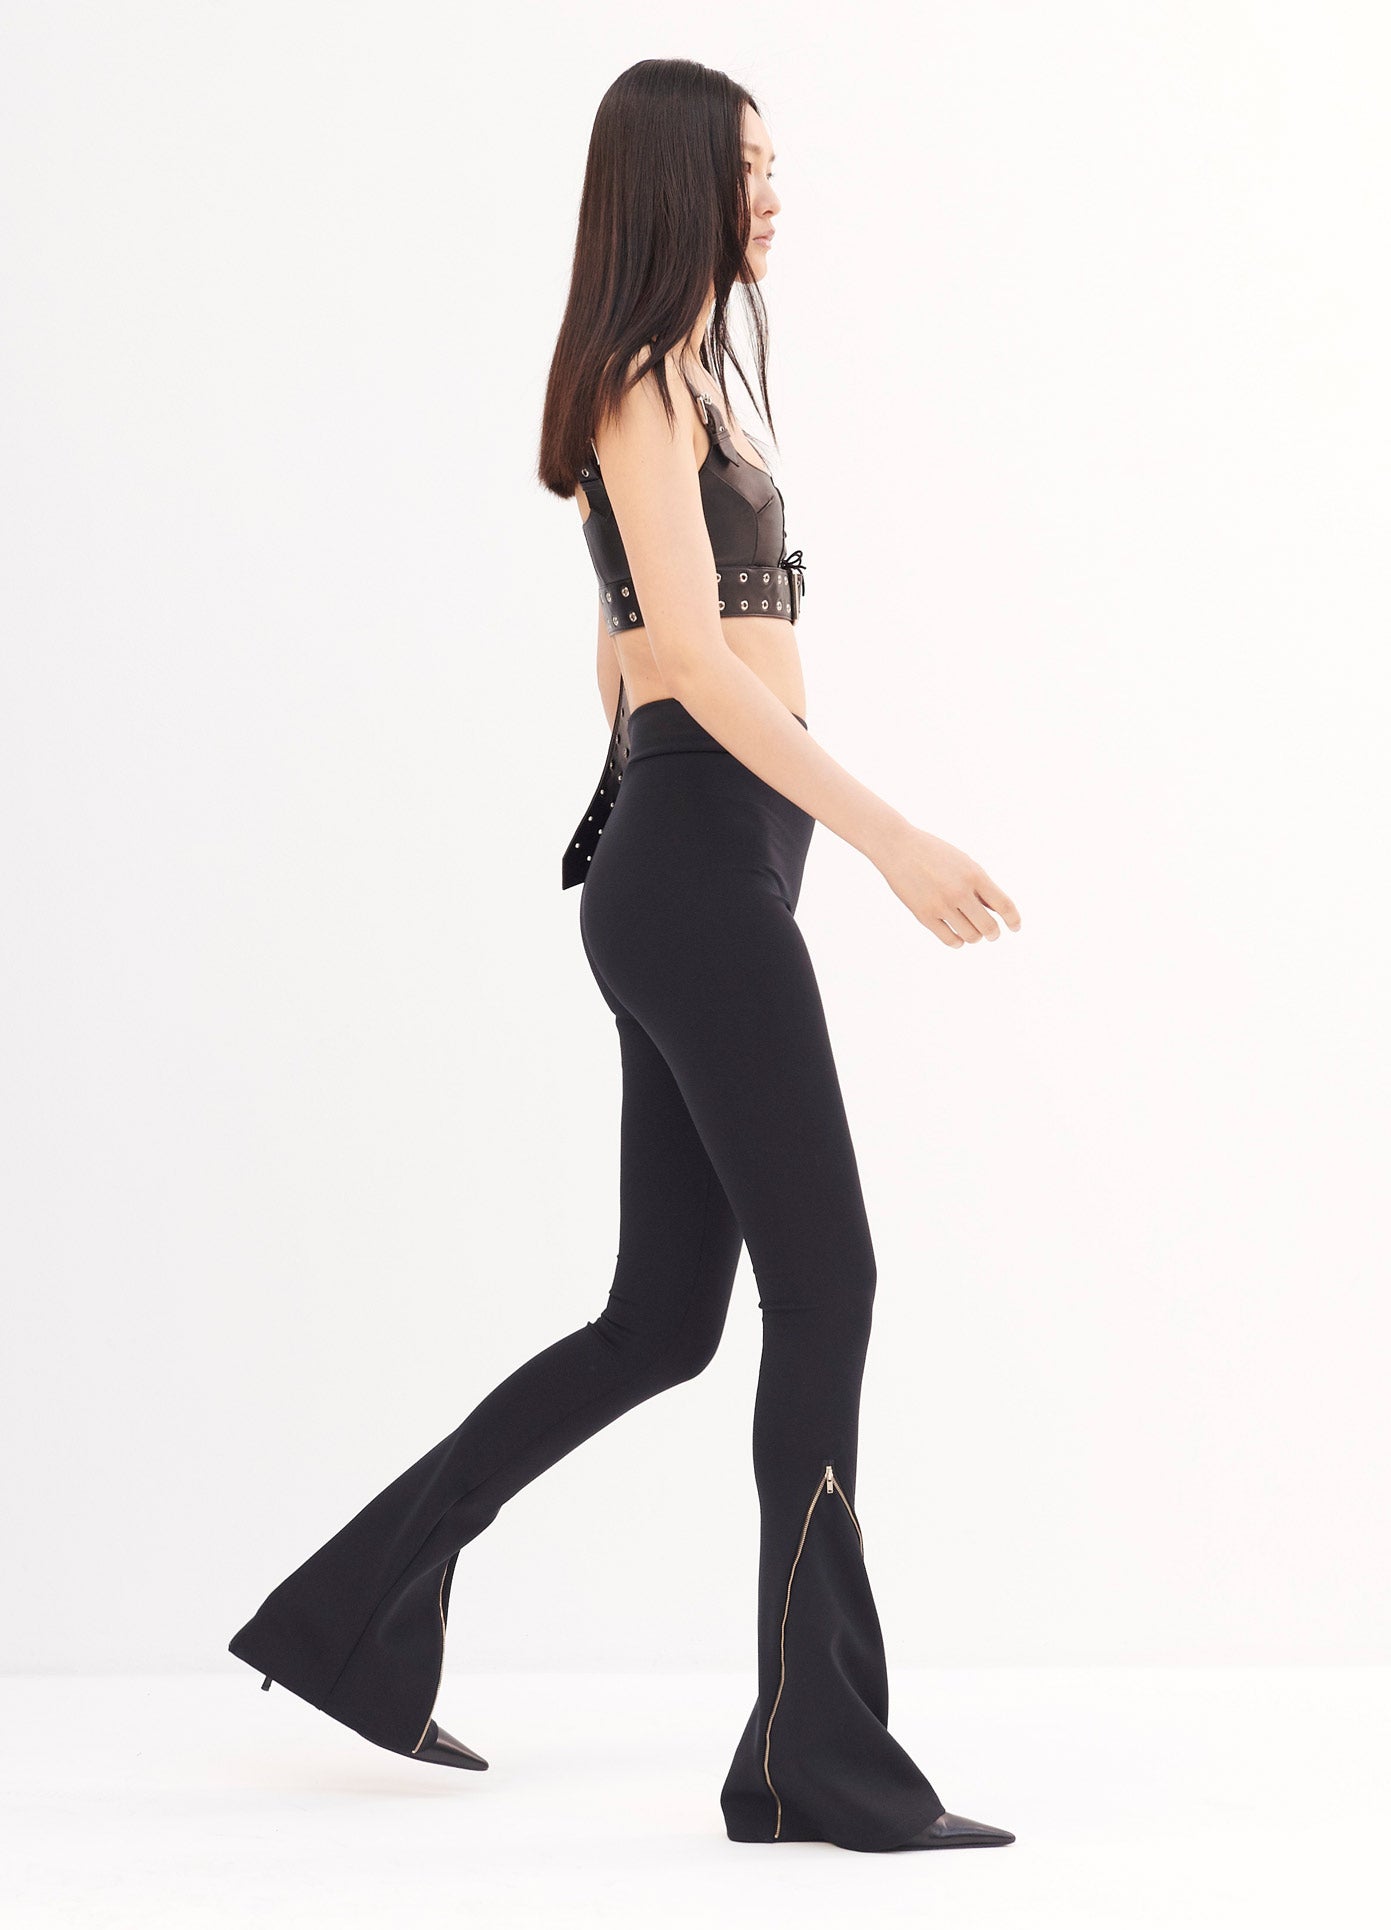 MONSE Scuba Zipper Detail Leggings in Black on Model Walking Full Side View